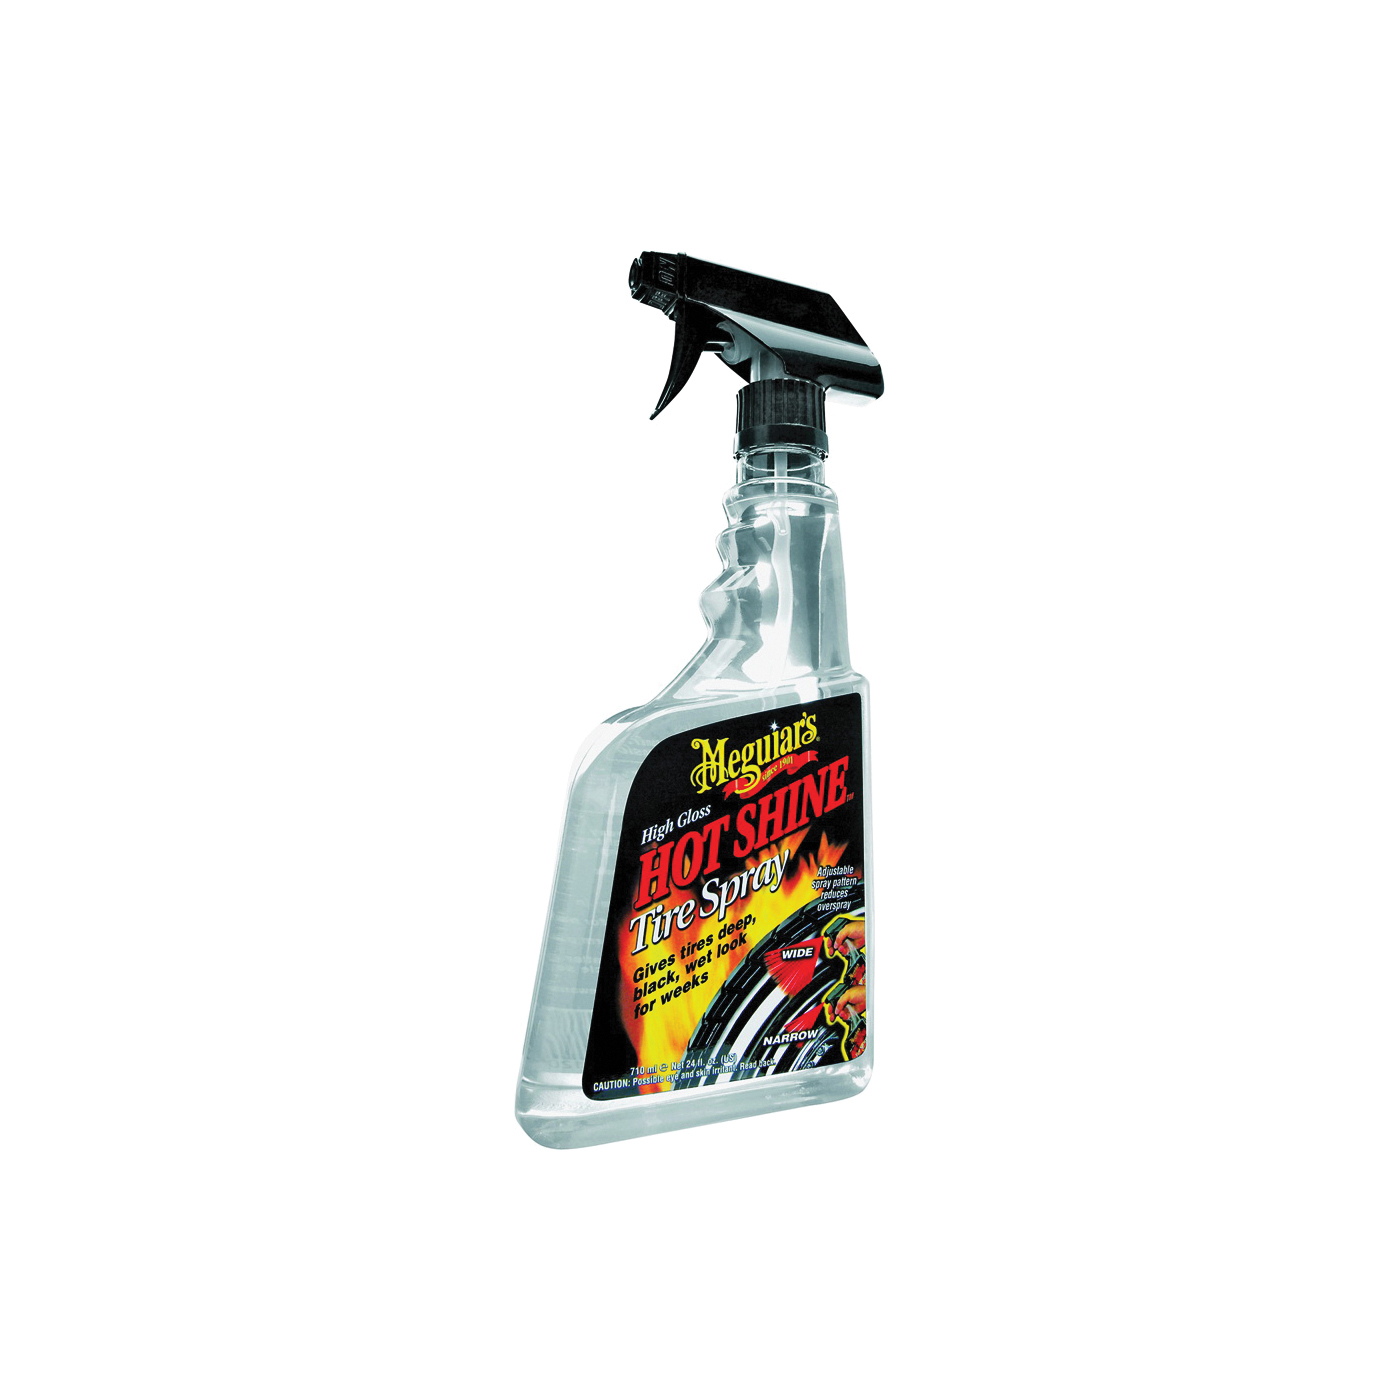 Buy Rain-X 5076784 Glass Cleaner, 680 mL Bottle, Liquid, Slight Fruity,  Clear Clear